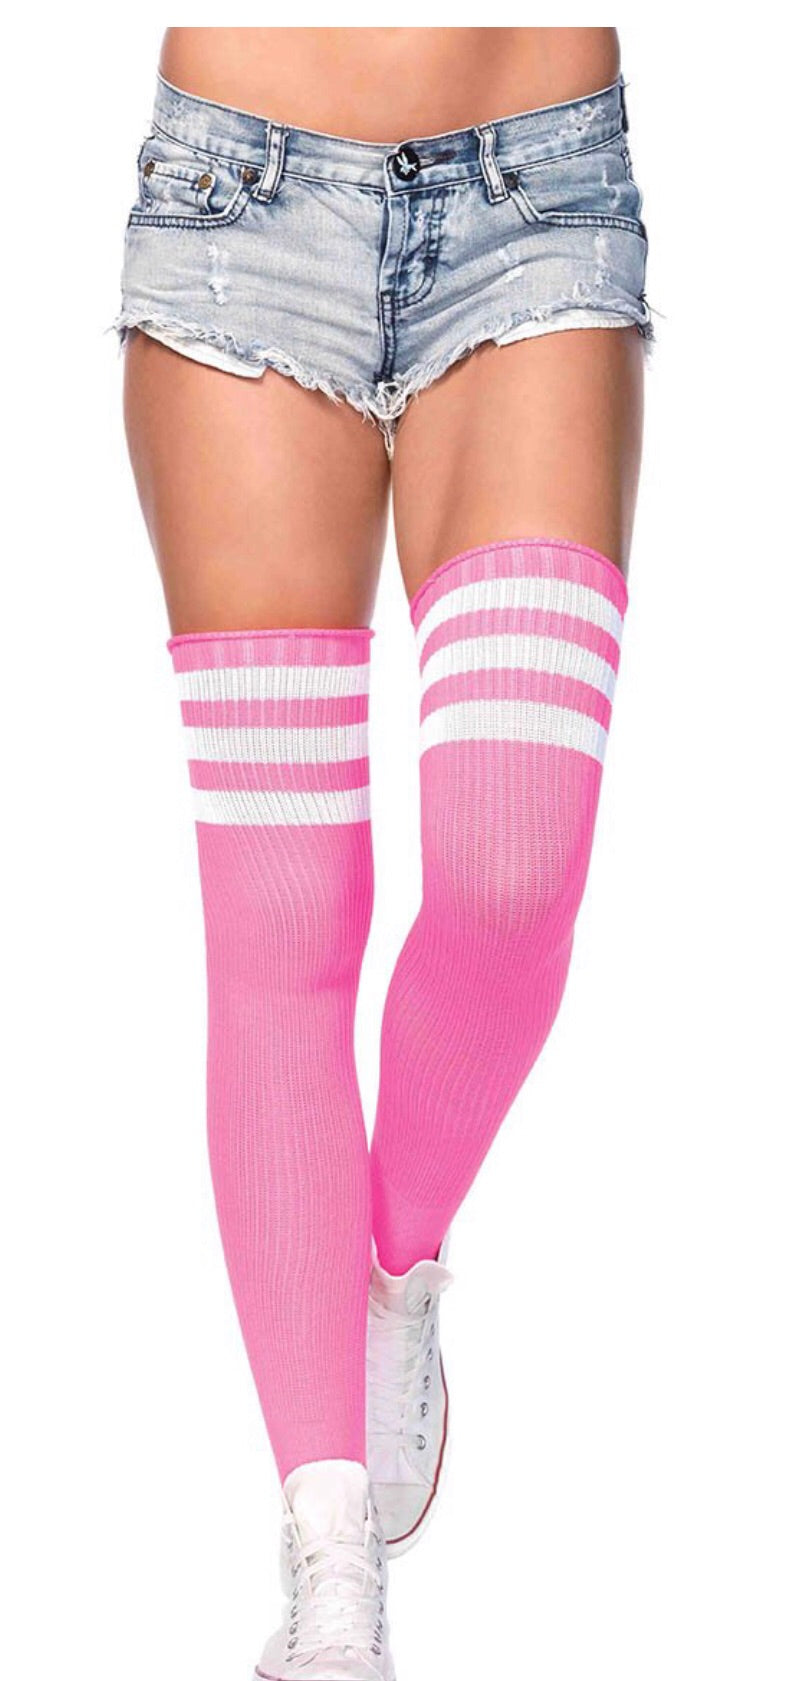 Athletic Knee High Stockings Neon Pink